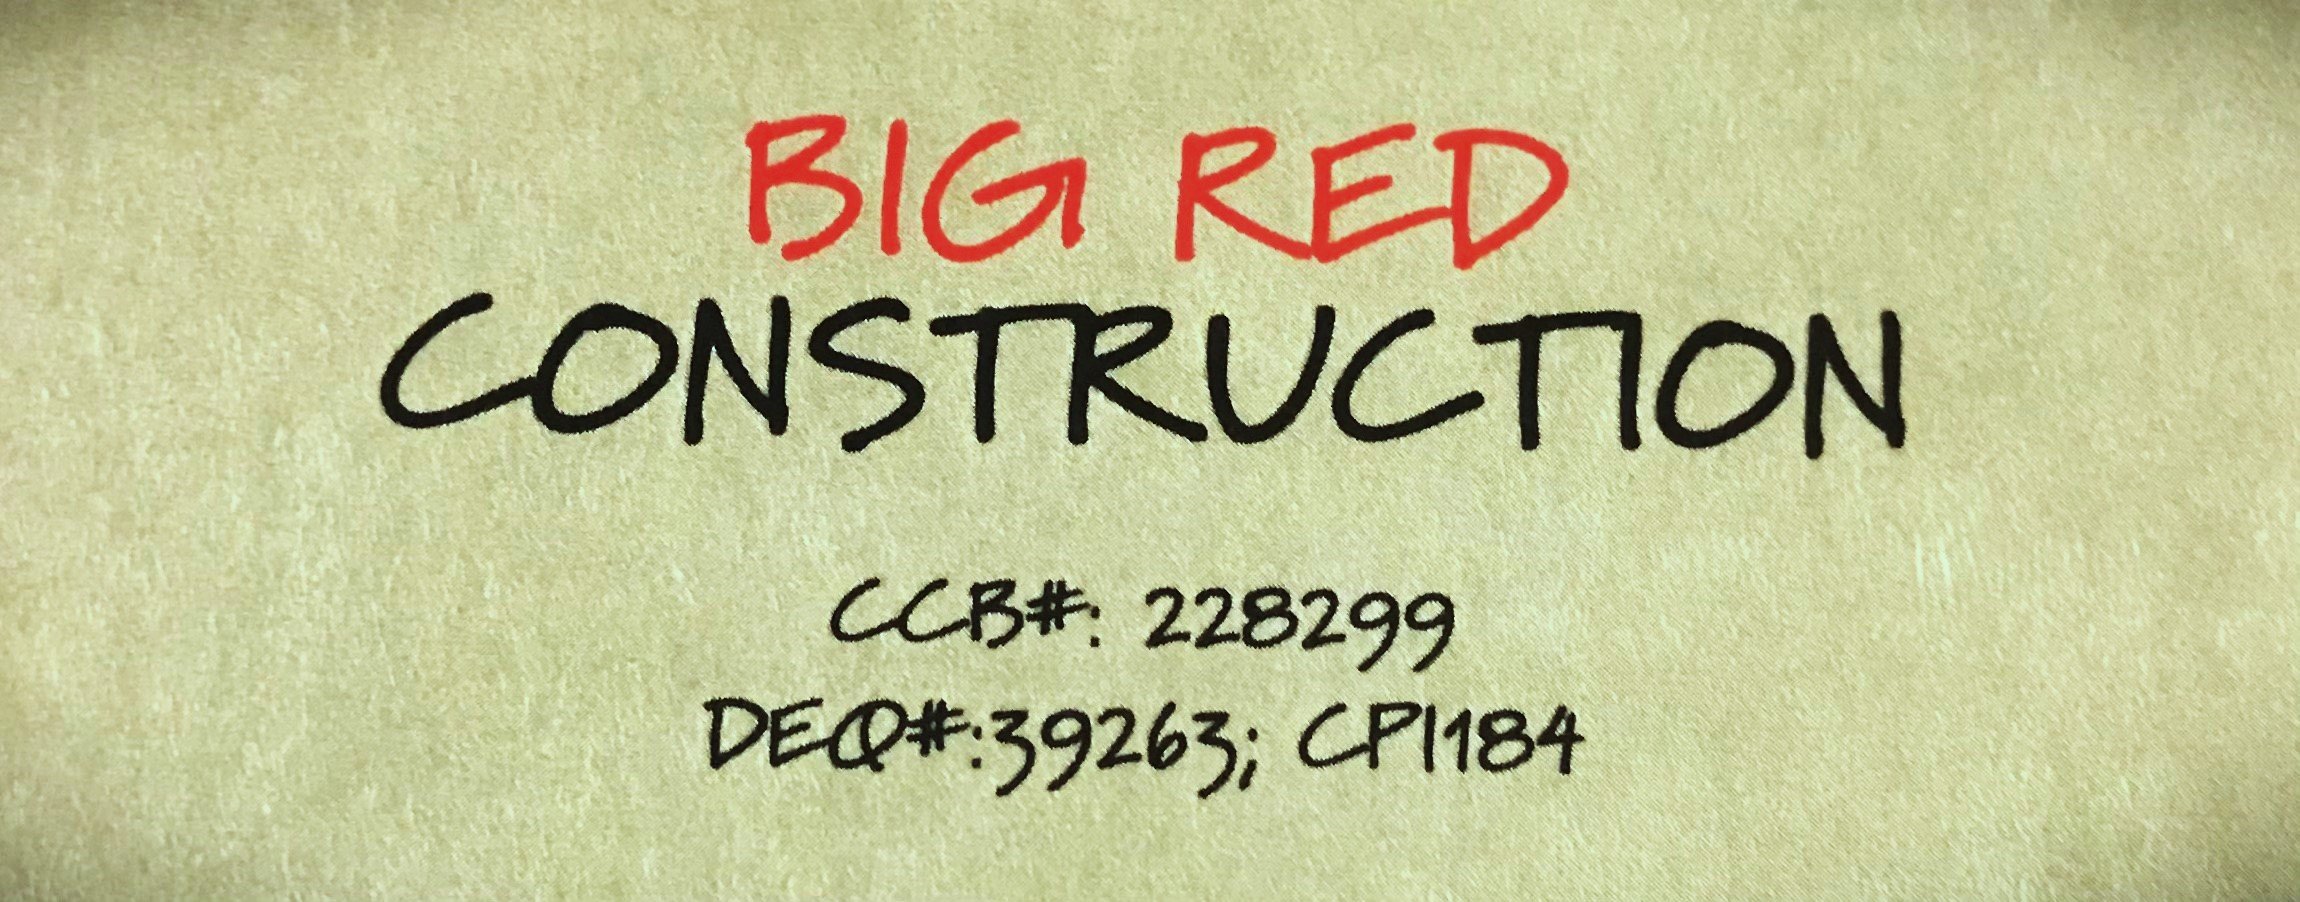 Big Red Construction, LLC Logo